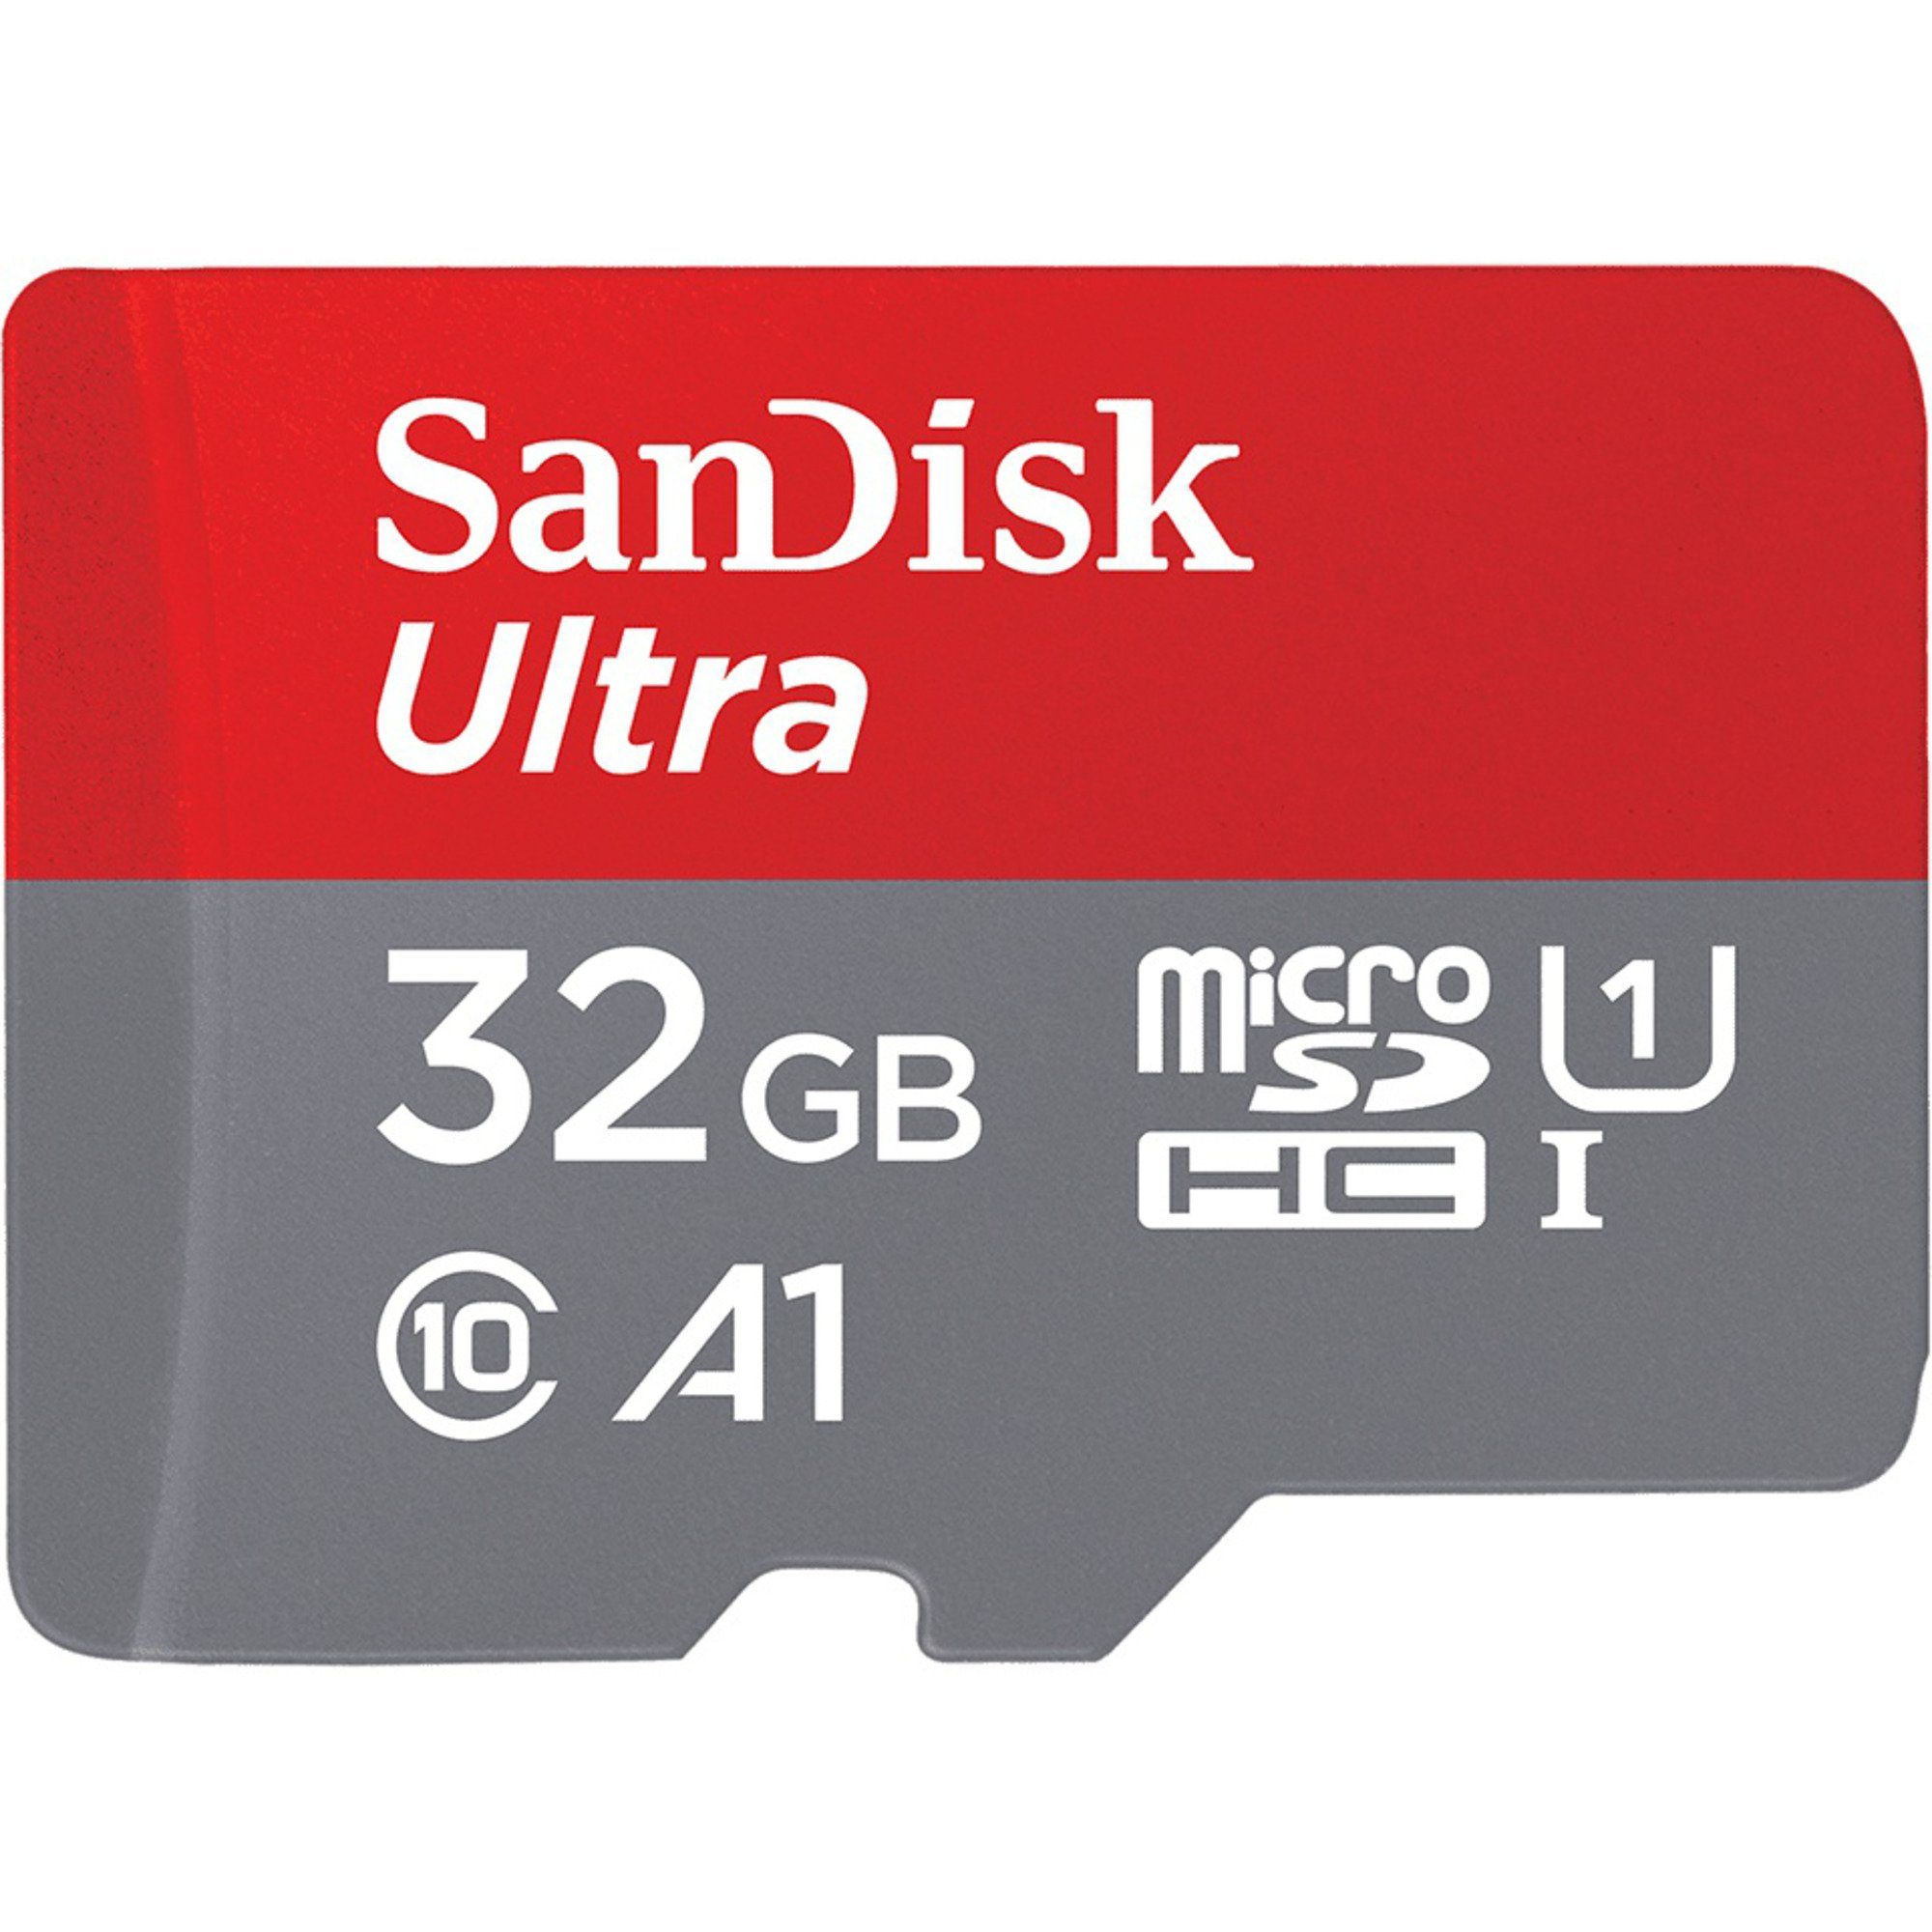 Sandisk Ultra 32 GB microSDHC Speicherkarte (32 GB GB)